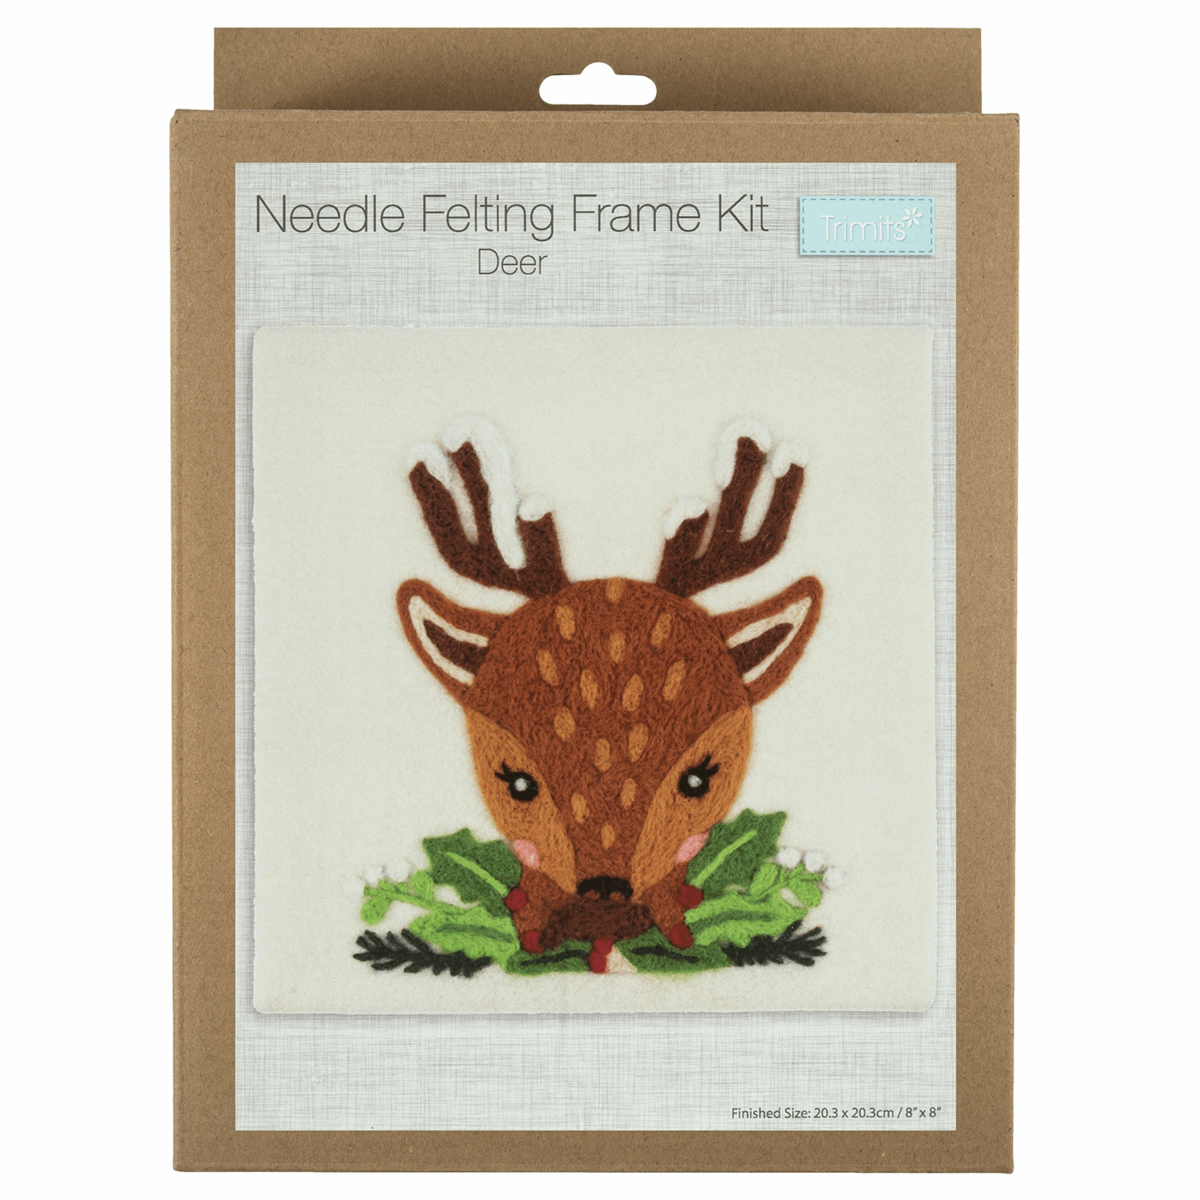  Needle Felting Kit with Frame: Deer